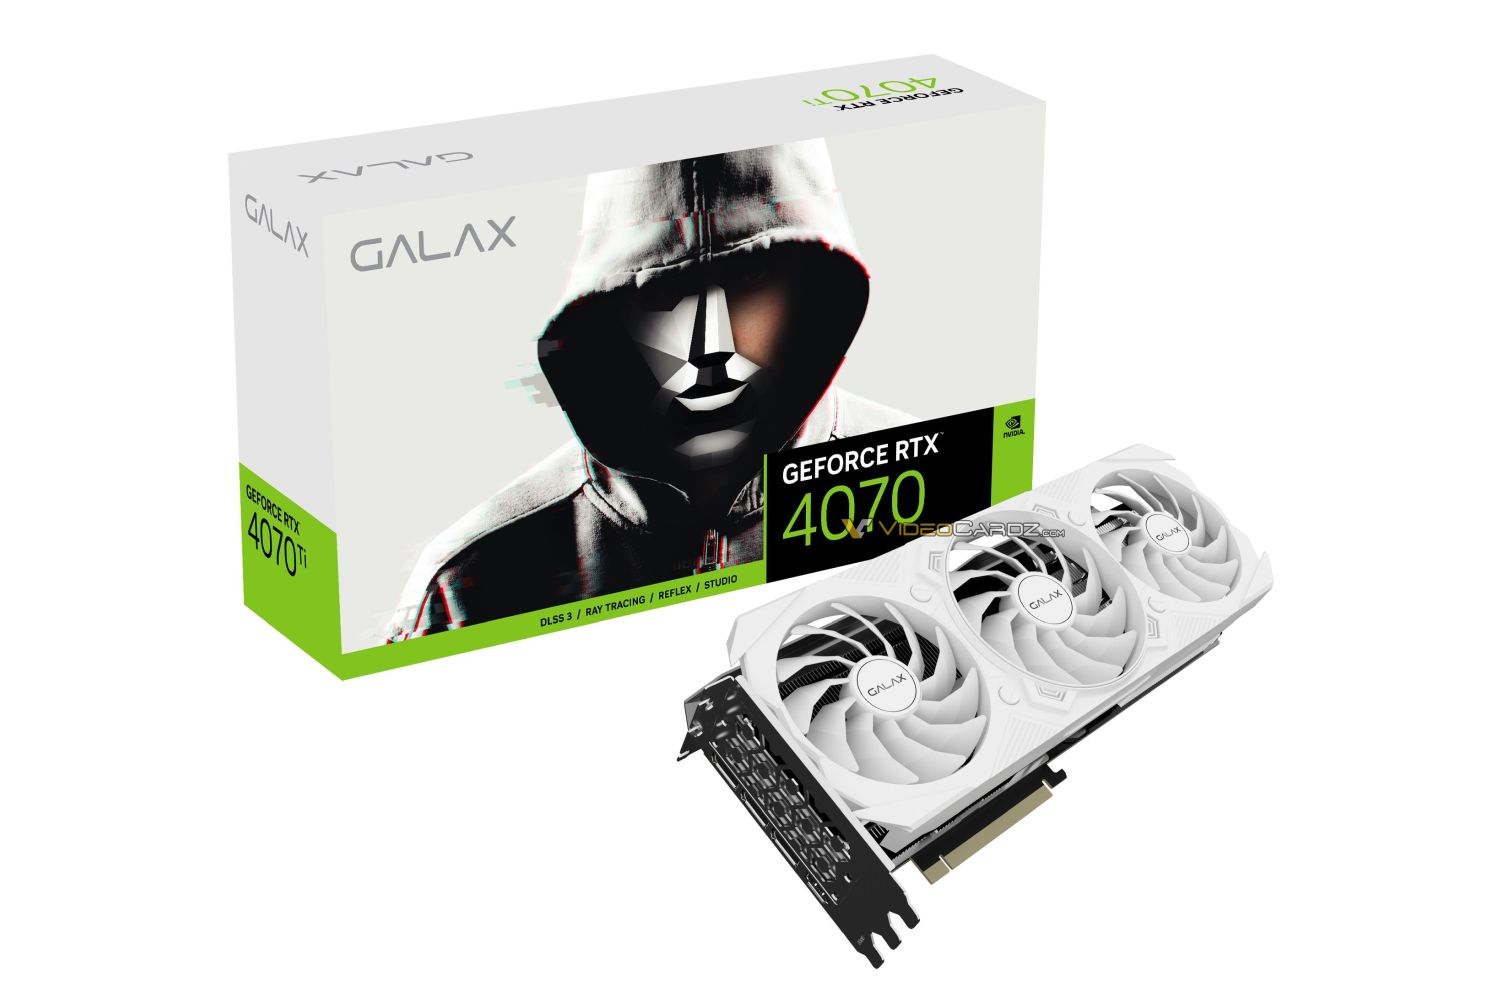 Galax taquine l’emballage des cartes graphiques NVIDIA GeForce RTX 4070